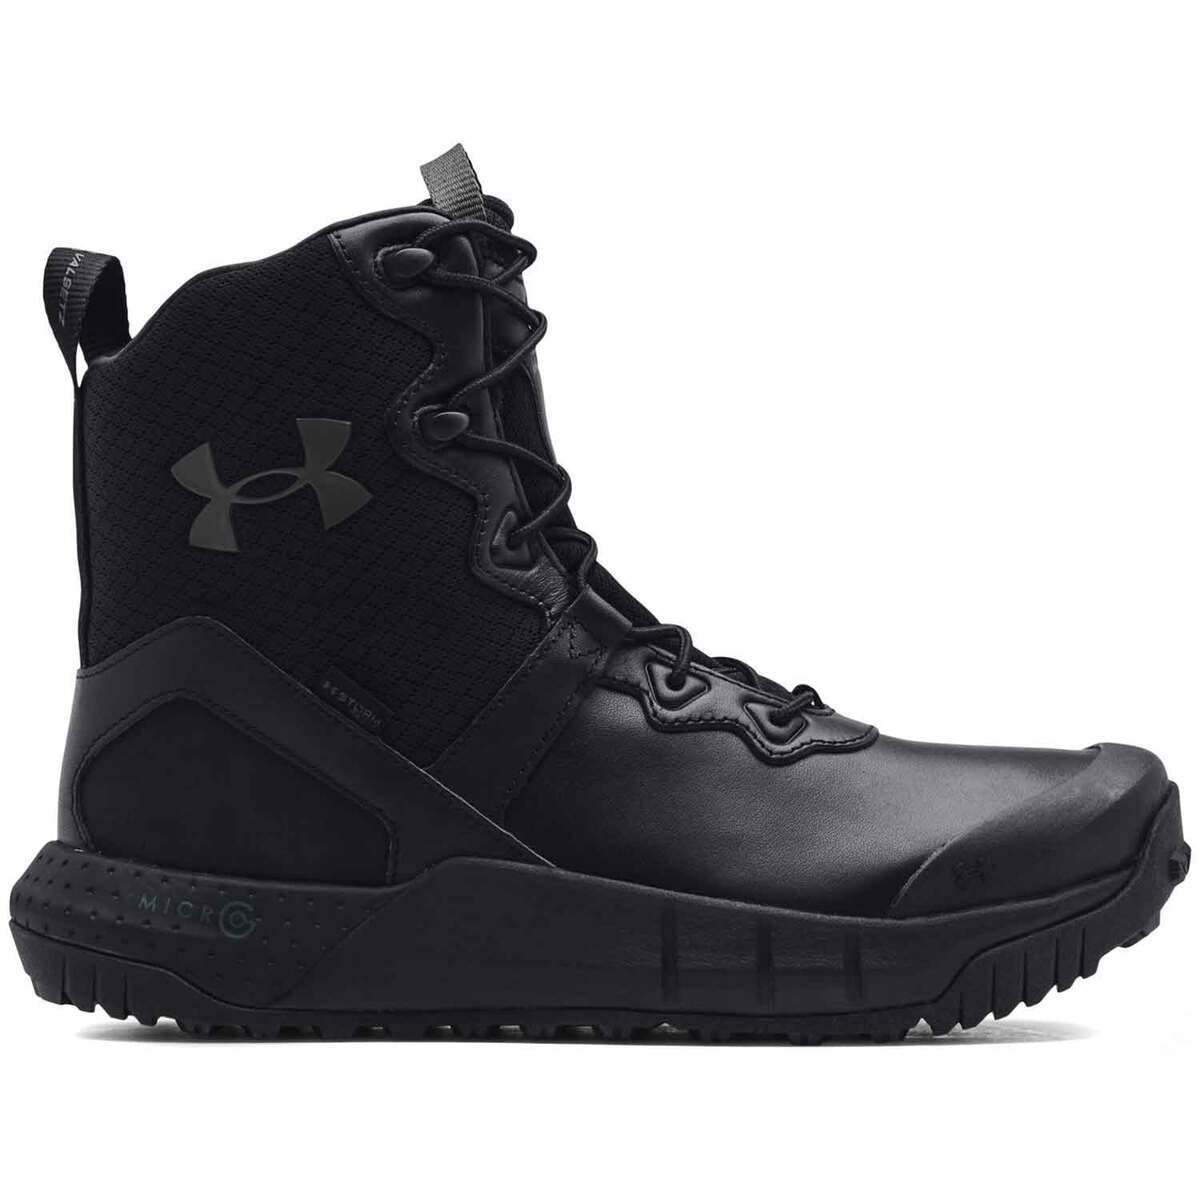 Under Armour Men's Micro G Valsetz Leather Tactical Boots | Sportsman's ...